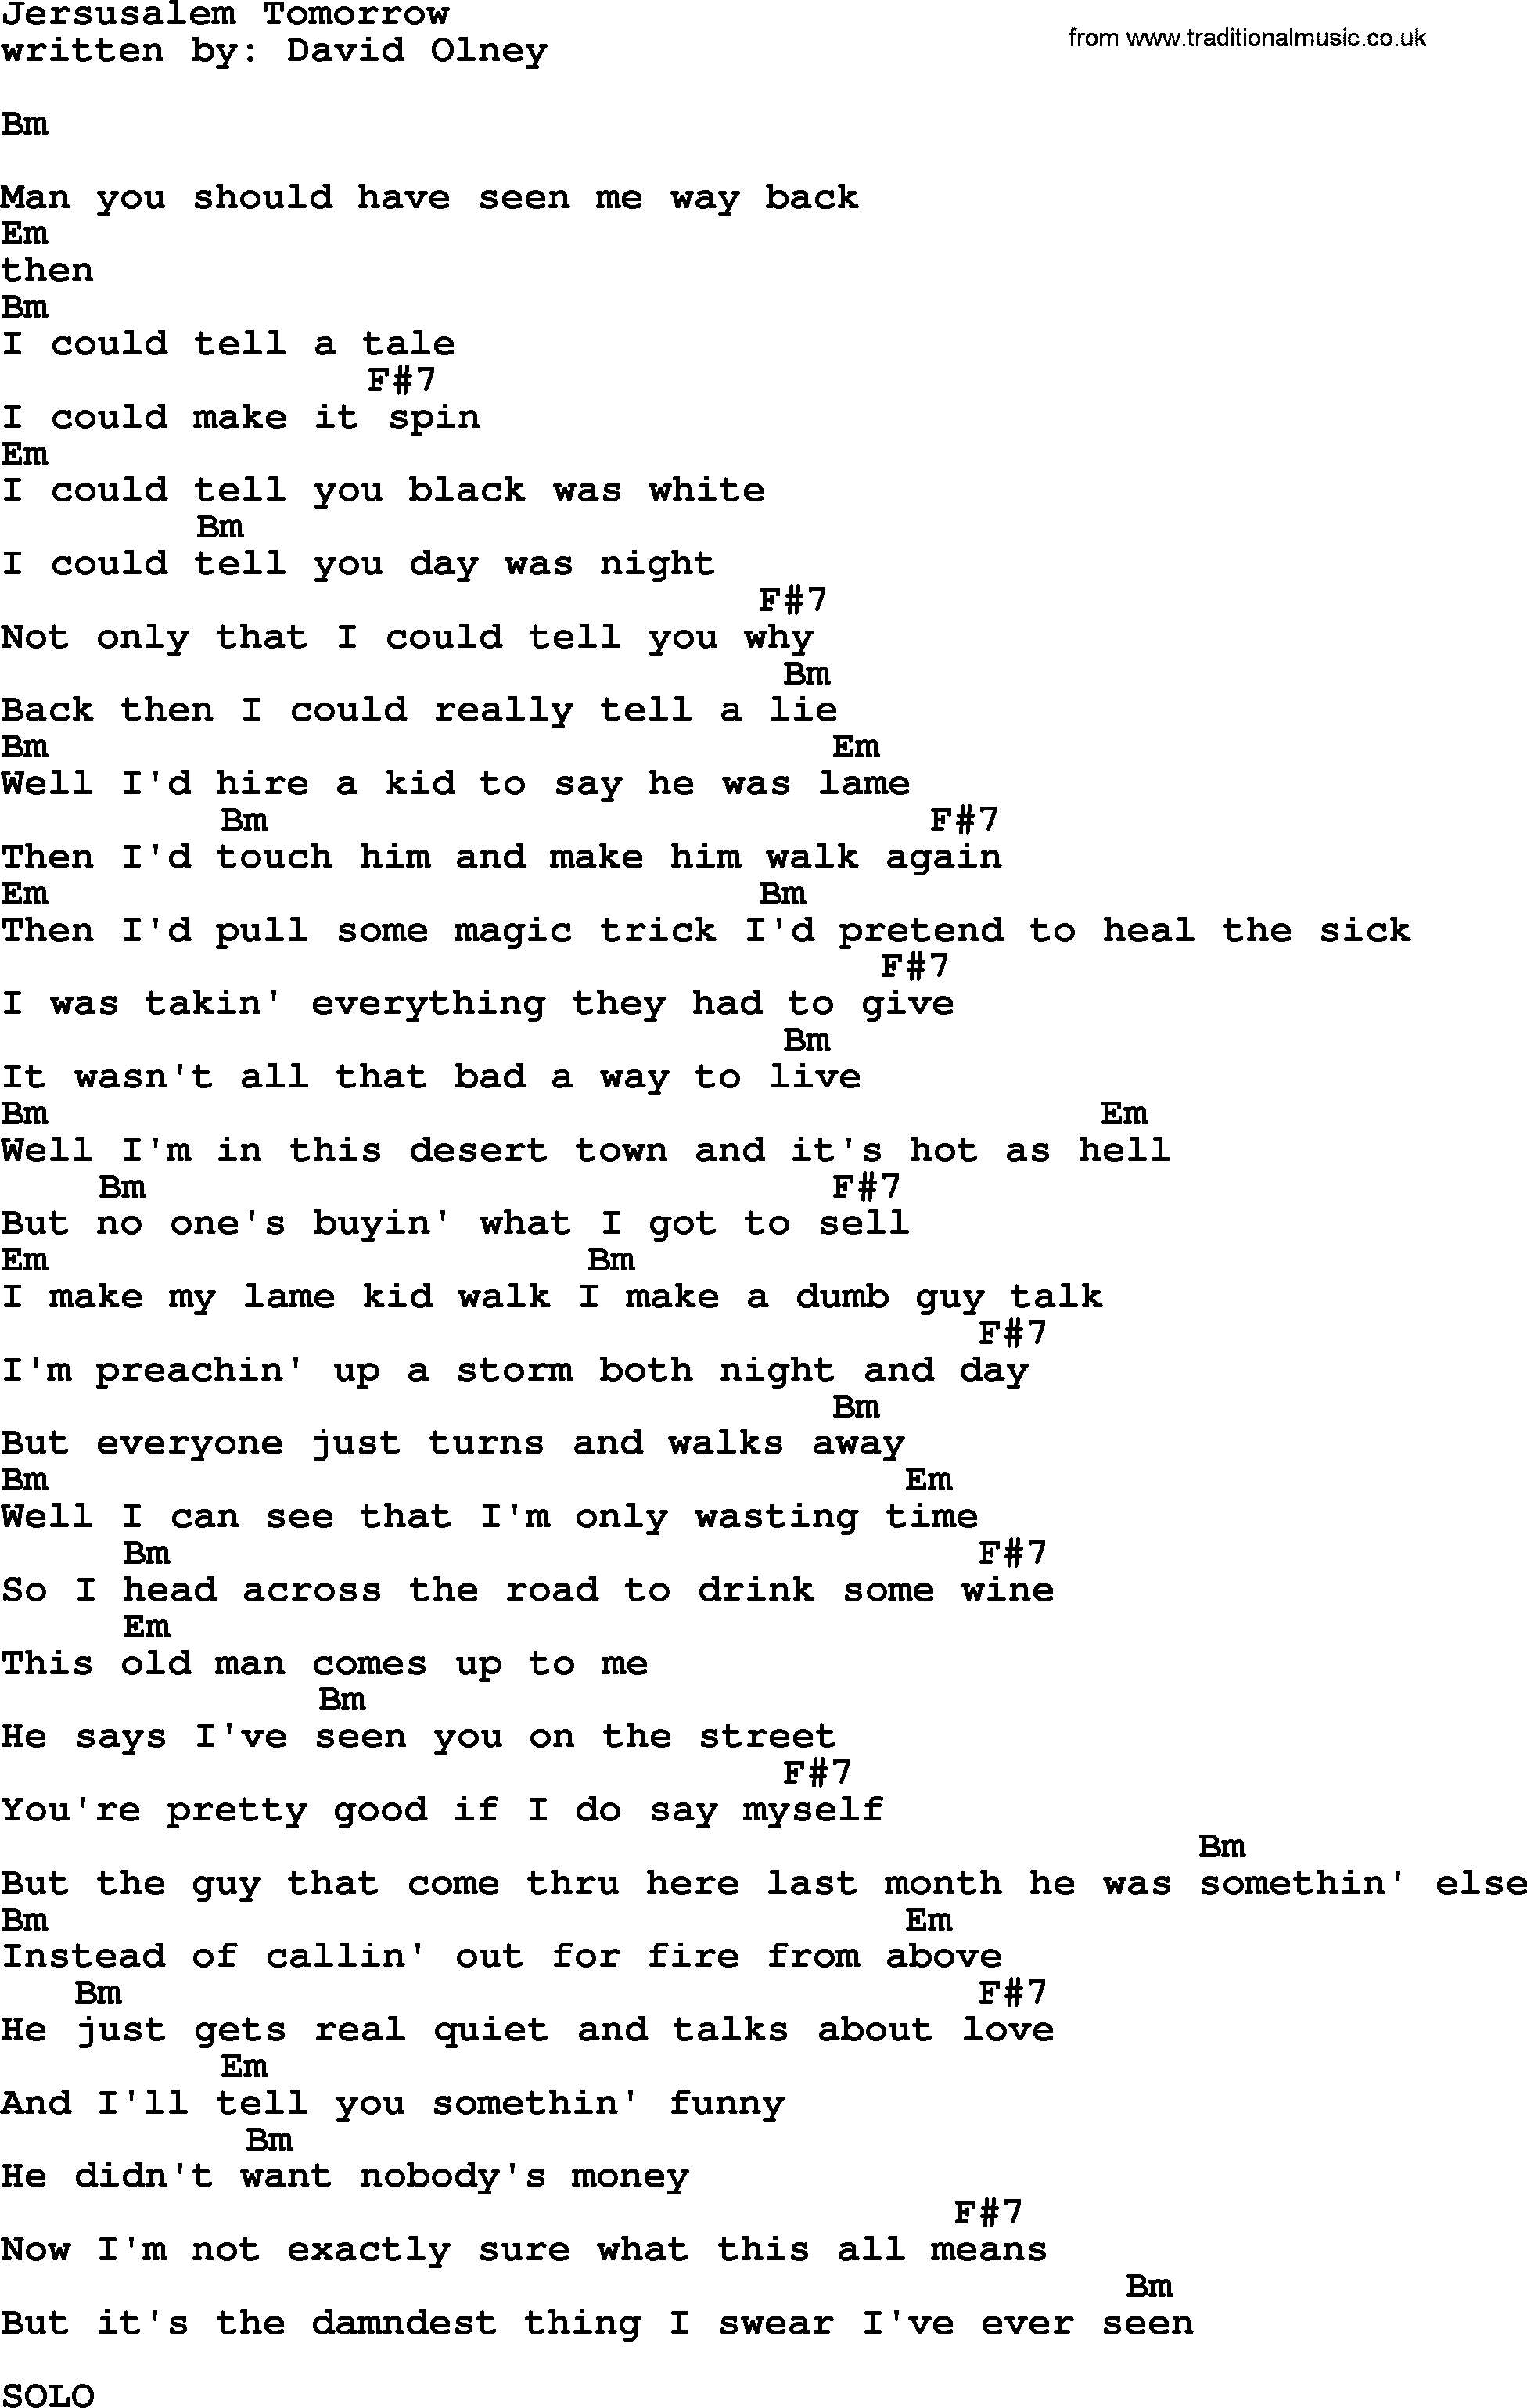 Emmylou Harris song: Jersusalem Tomorrow lyrics and chords